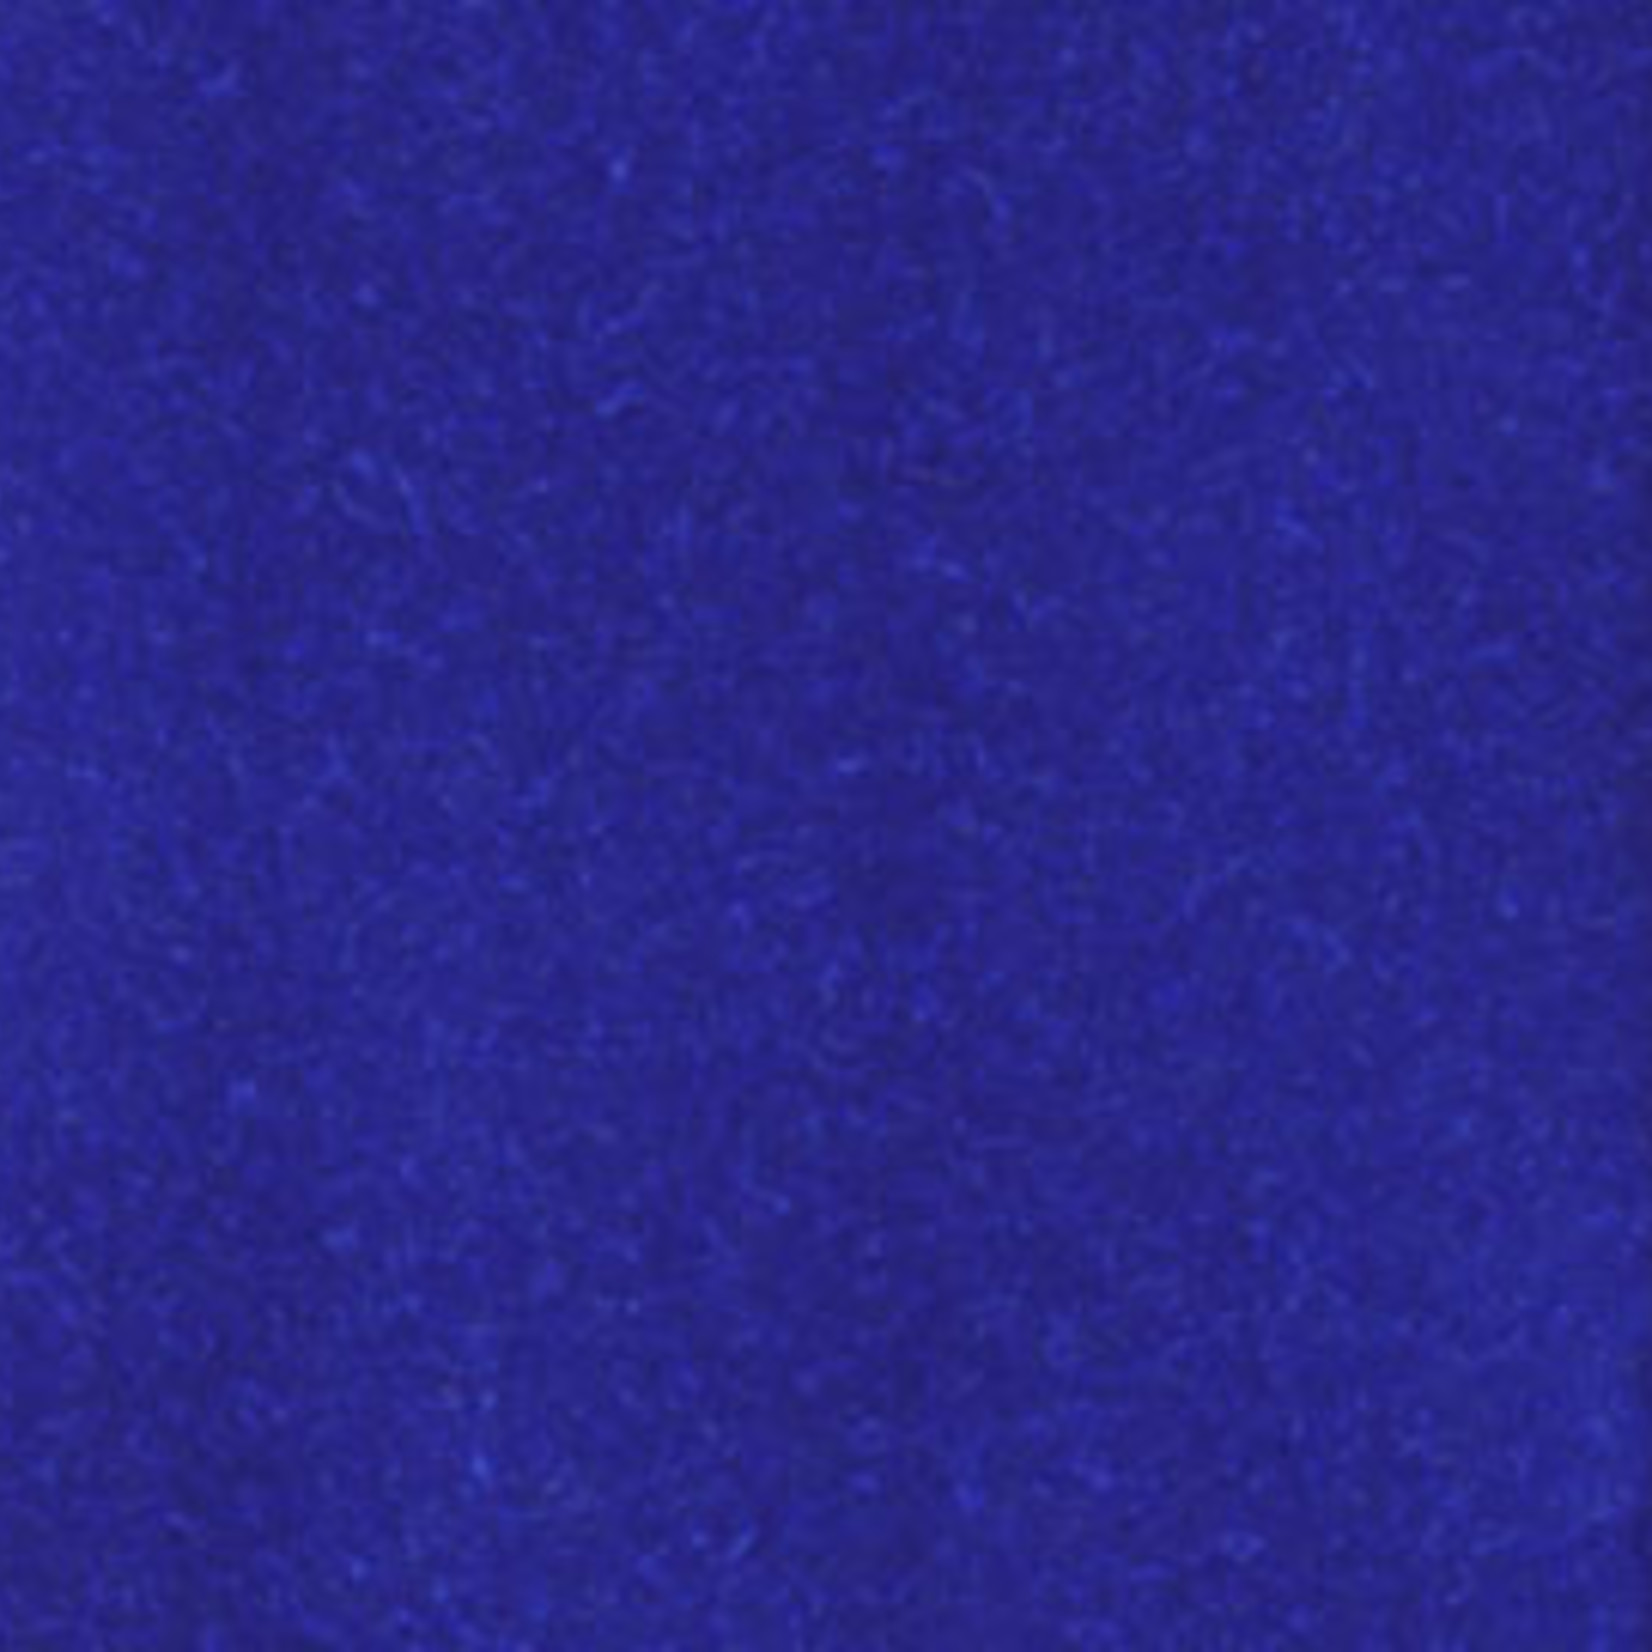 COPIC COPIC SKETCH B28 ROYAL BLUE